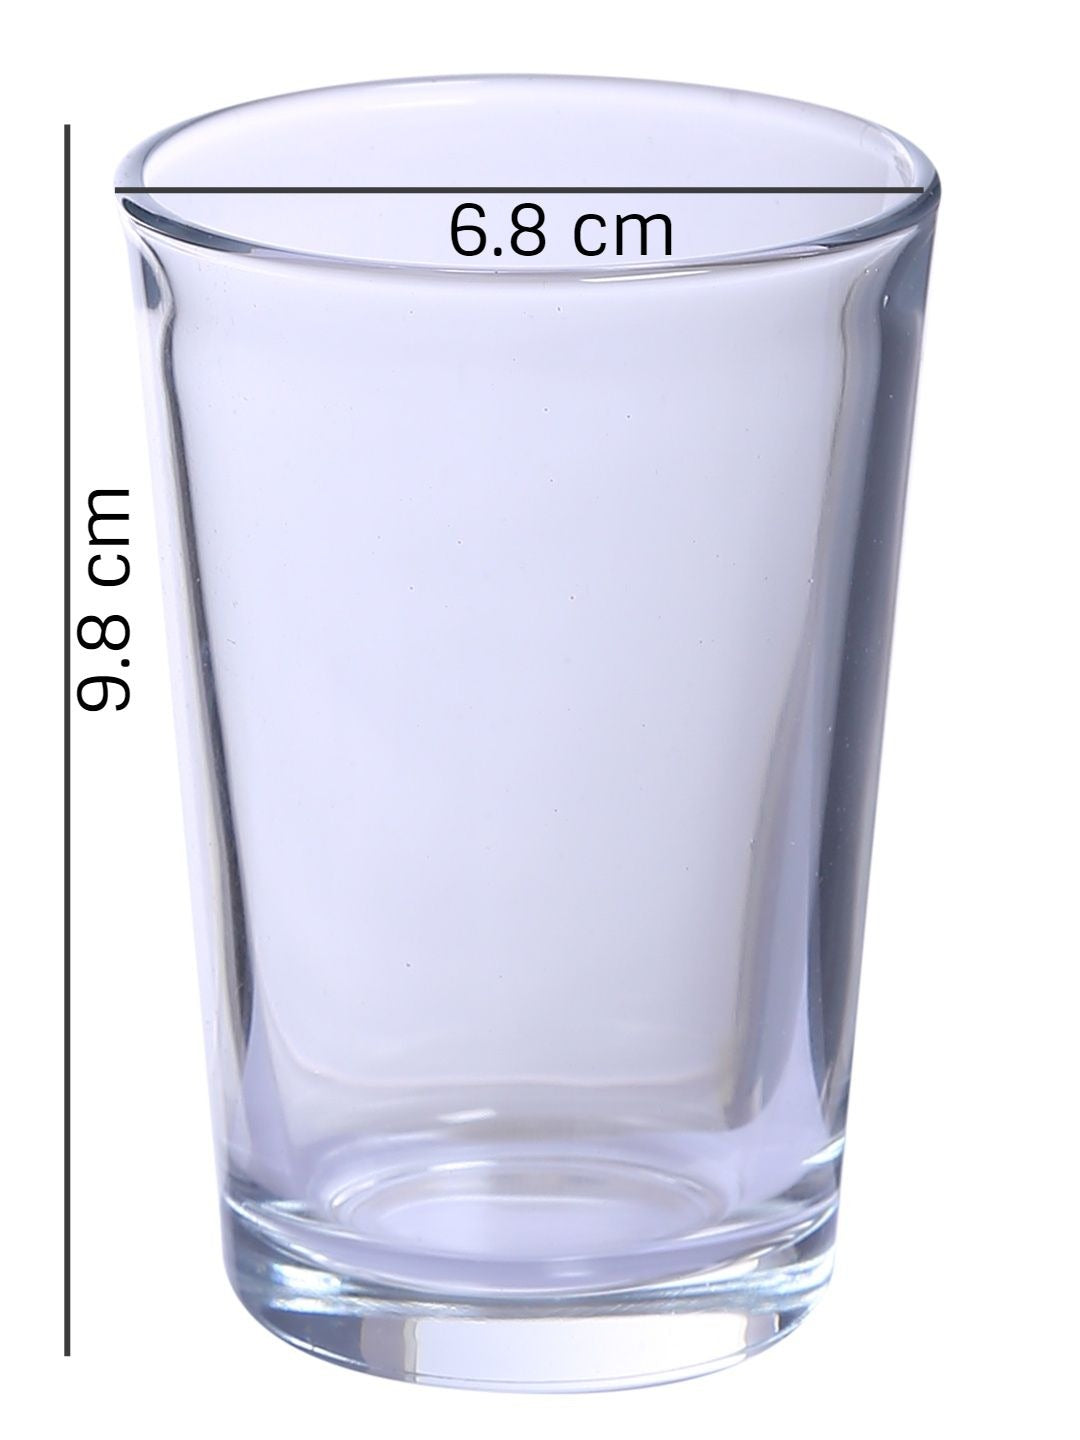 Dimensions of Elegant Juice Glasses - Enhance your table setting.